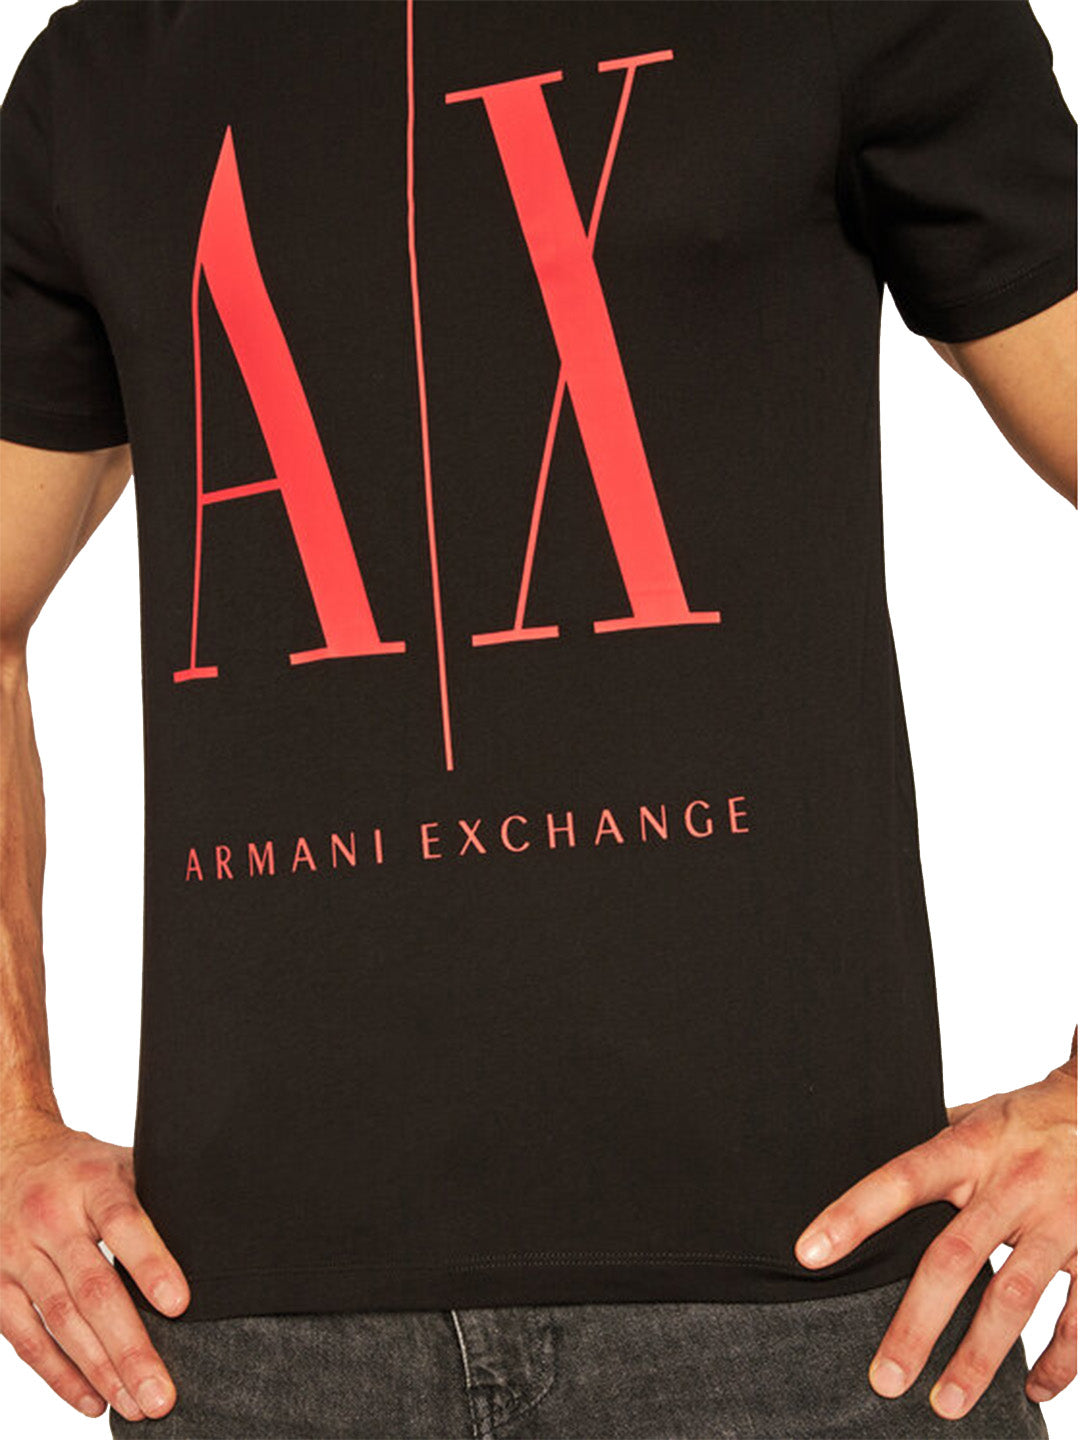 ARMANI EXCHANGE black/red cotton T-shirt